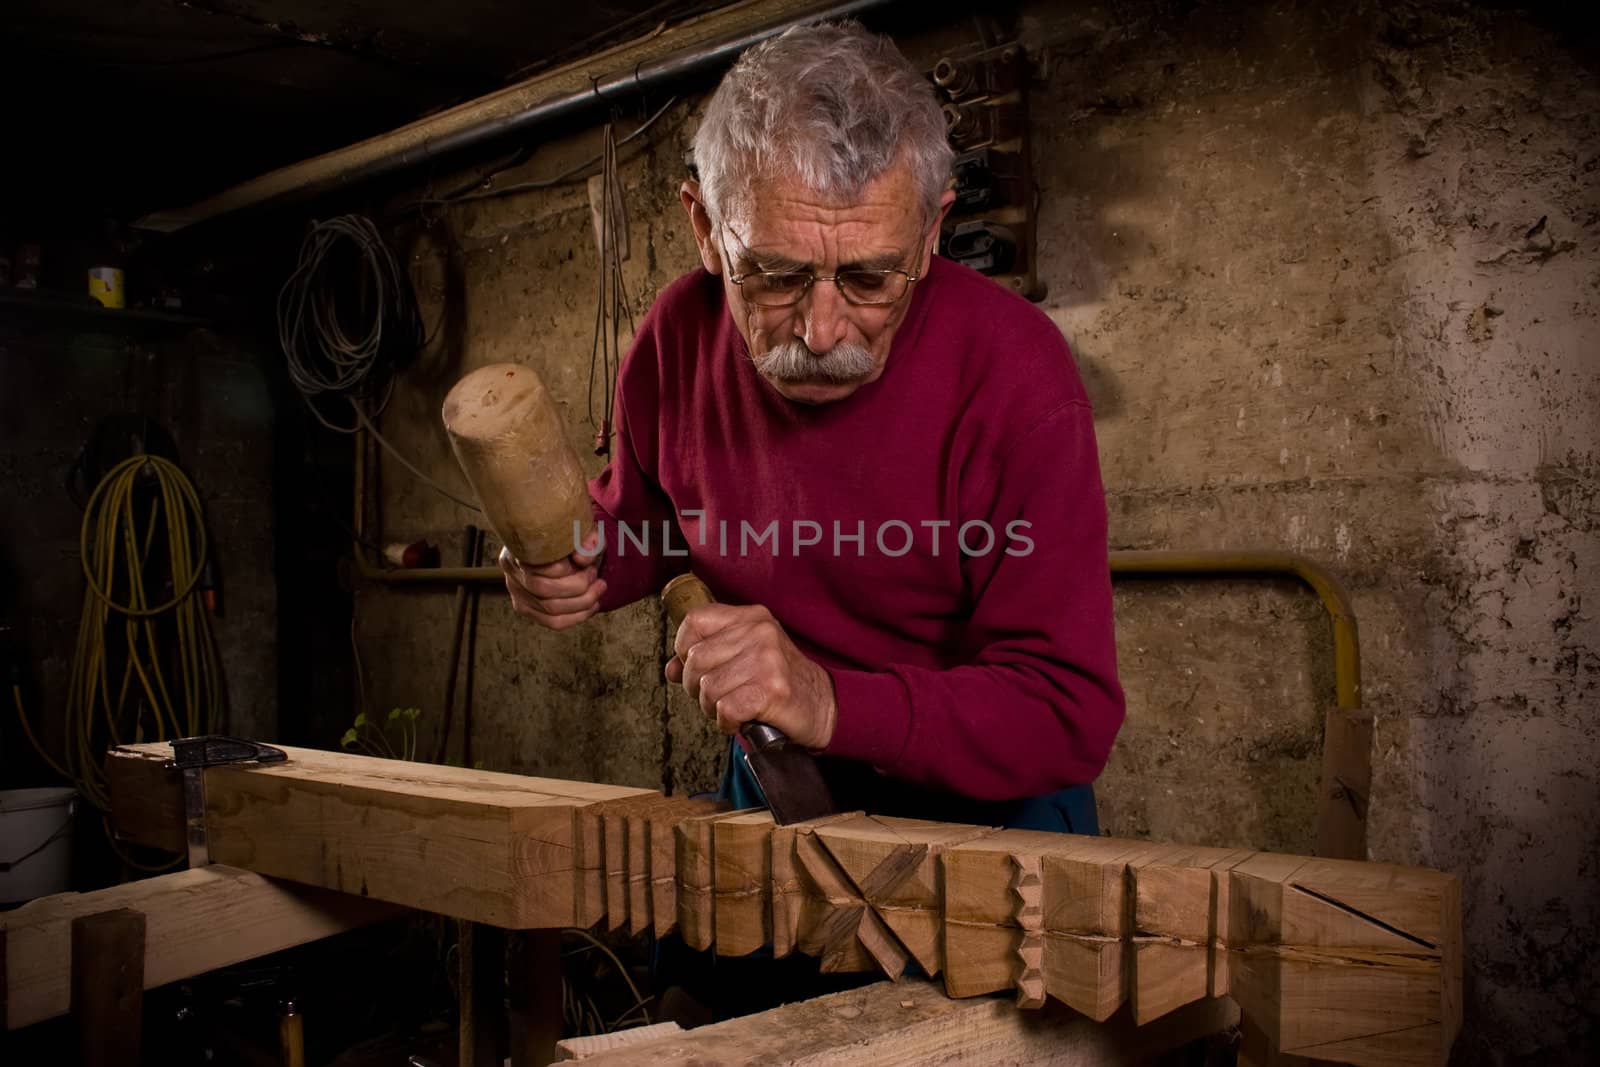 Old woodcarver work in the workshop 1